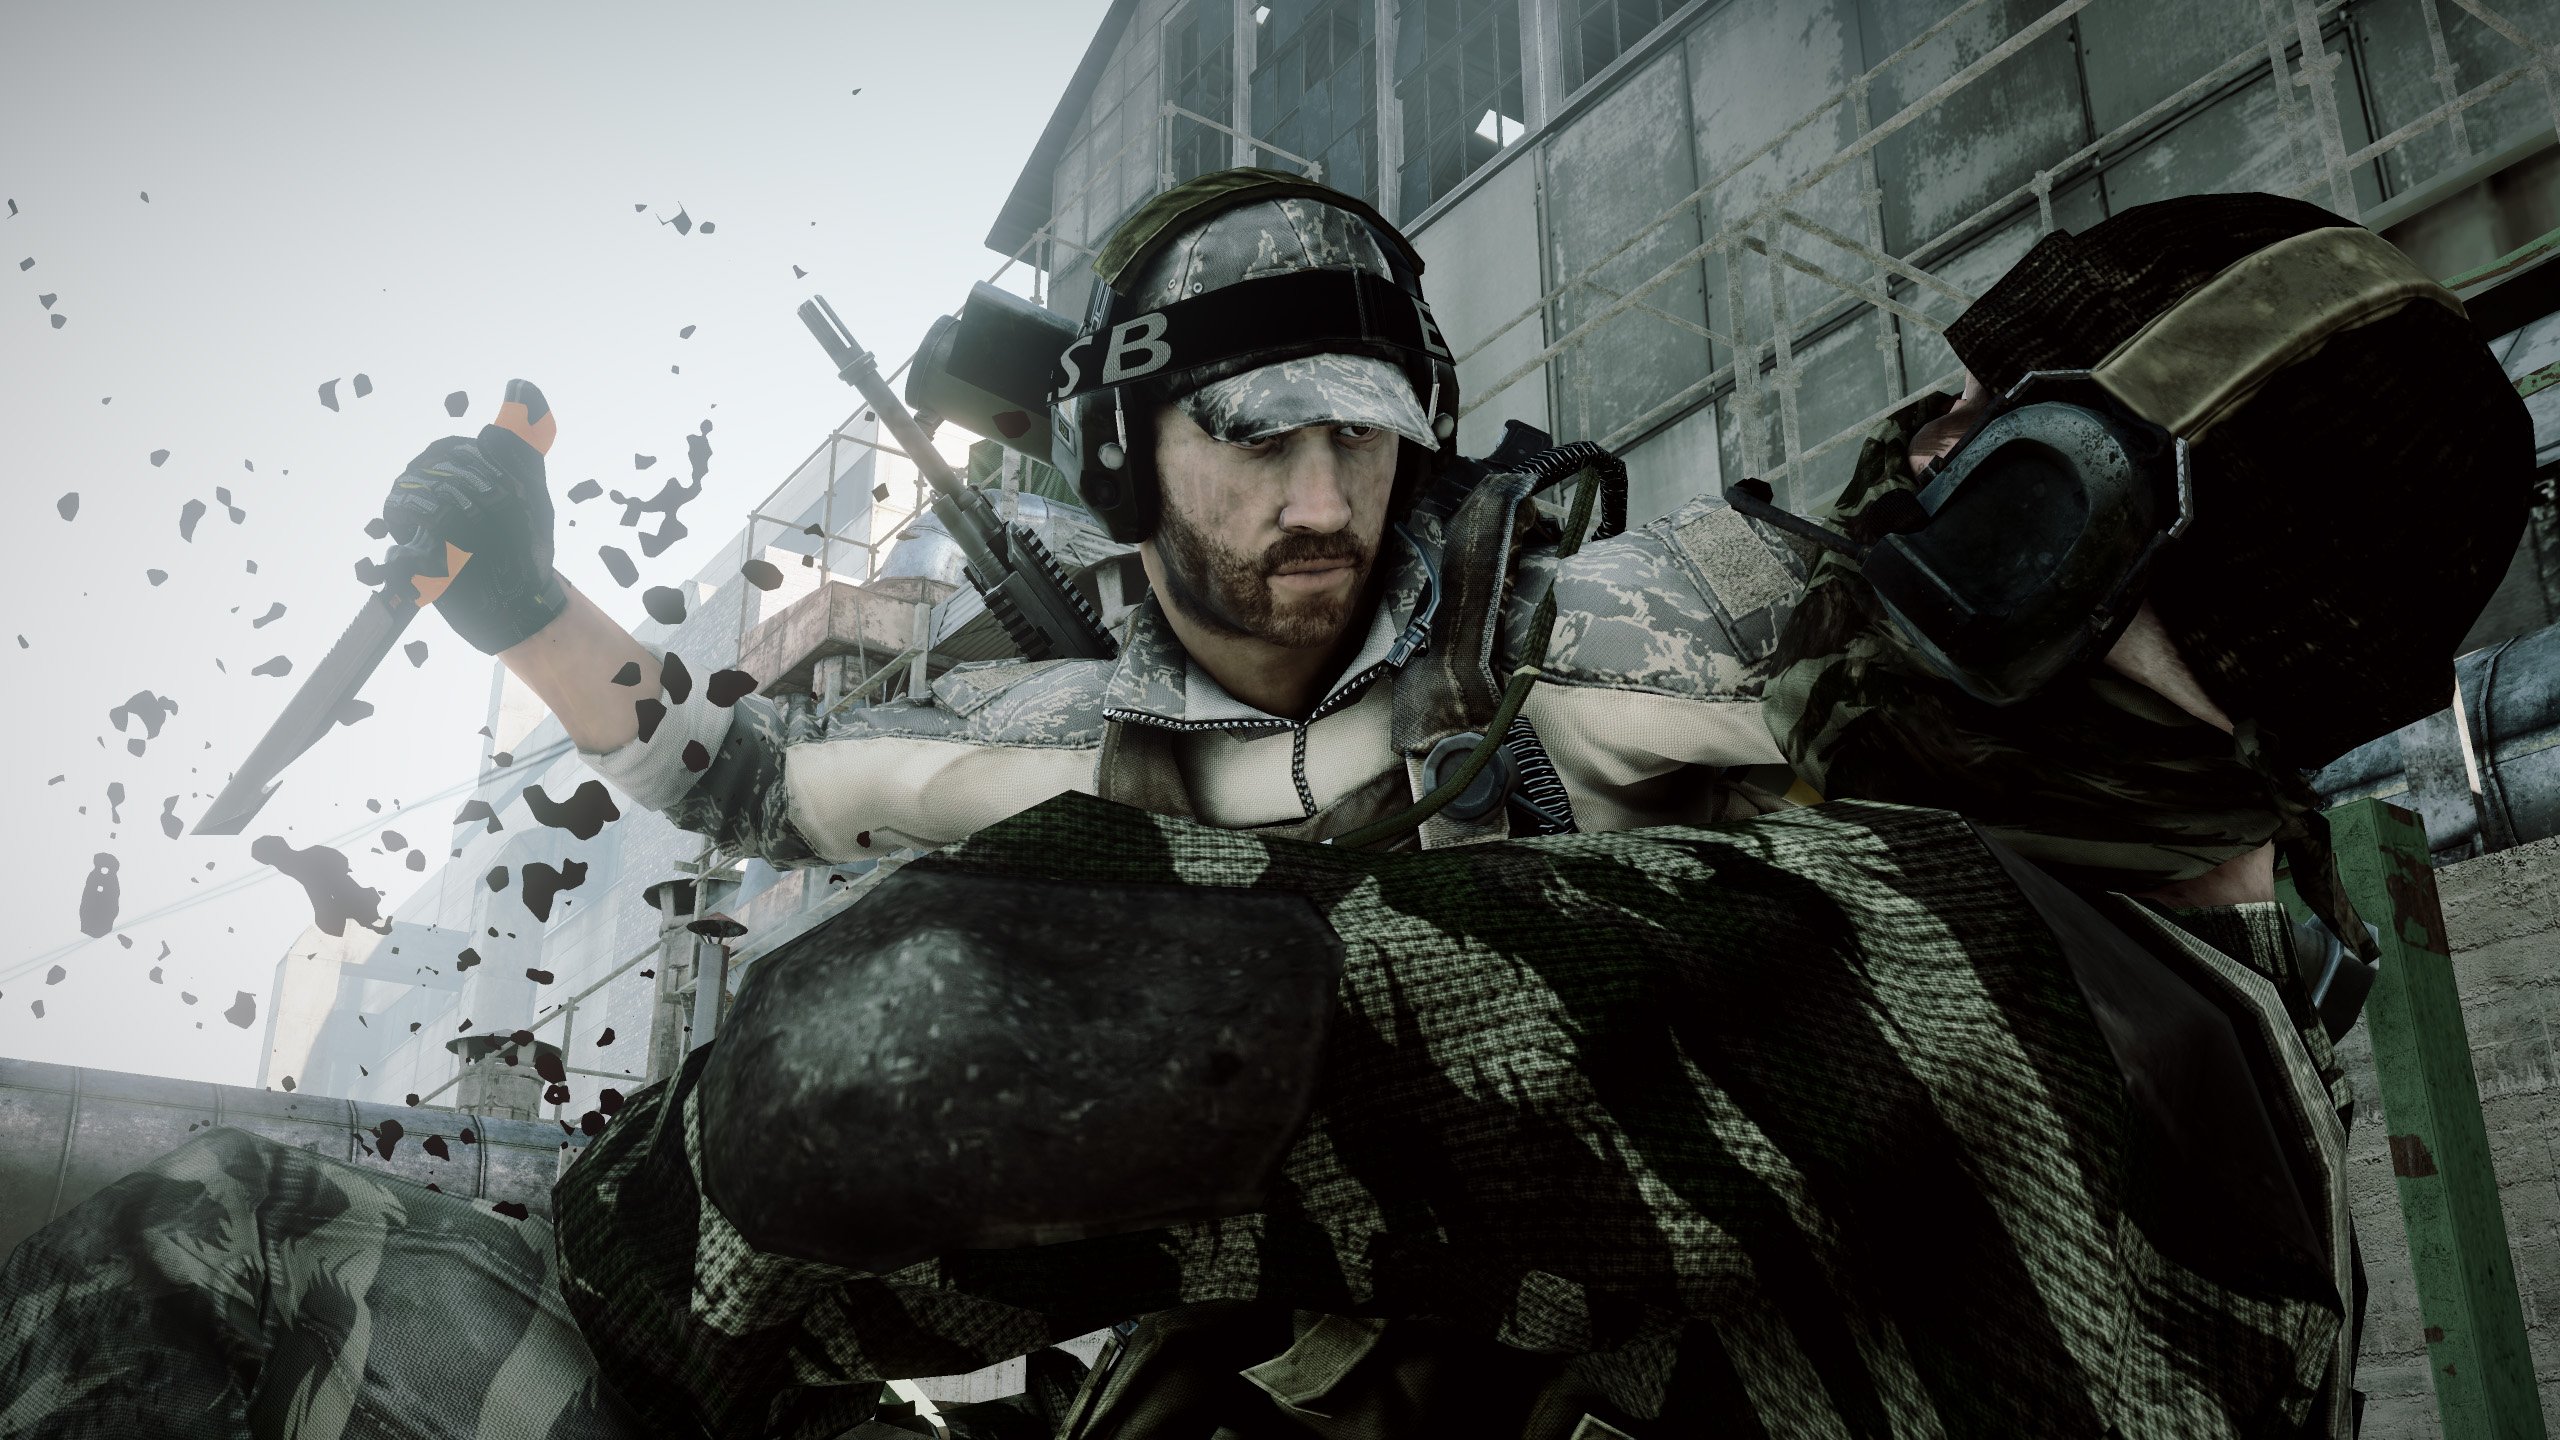 Battlefield 3: Premium Edition – PC Origin [Online Game Code]